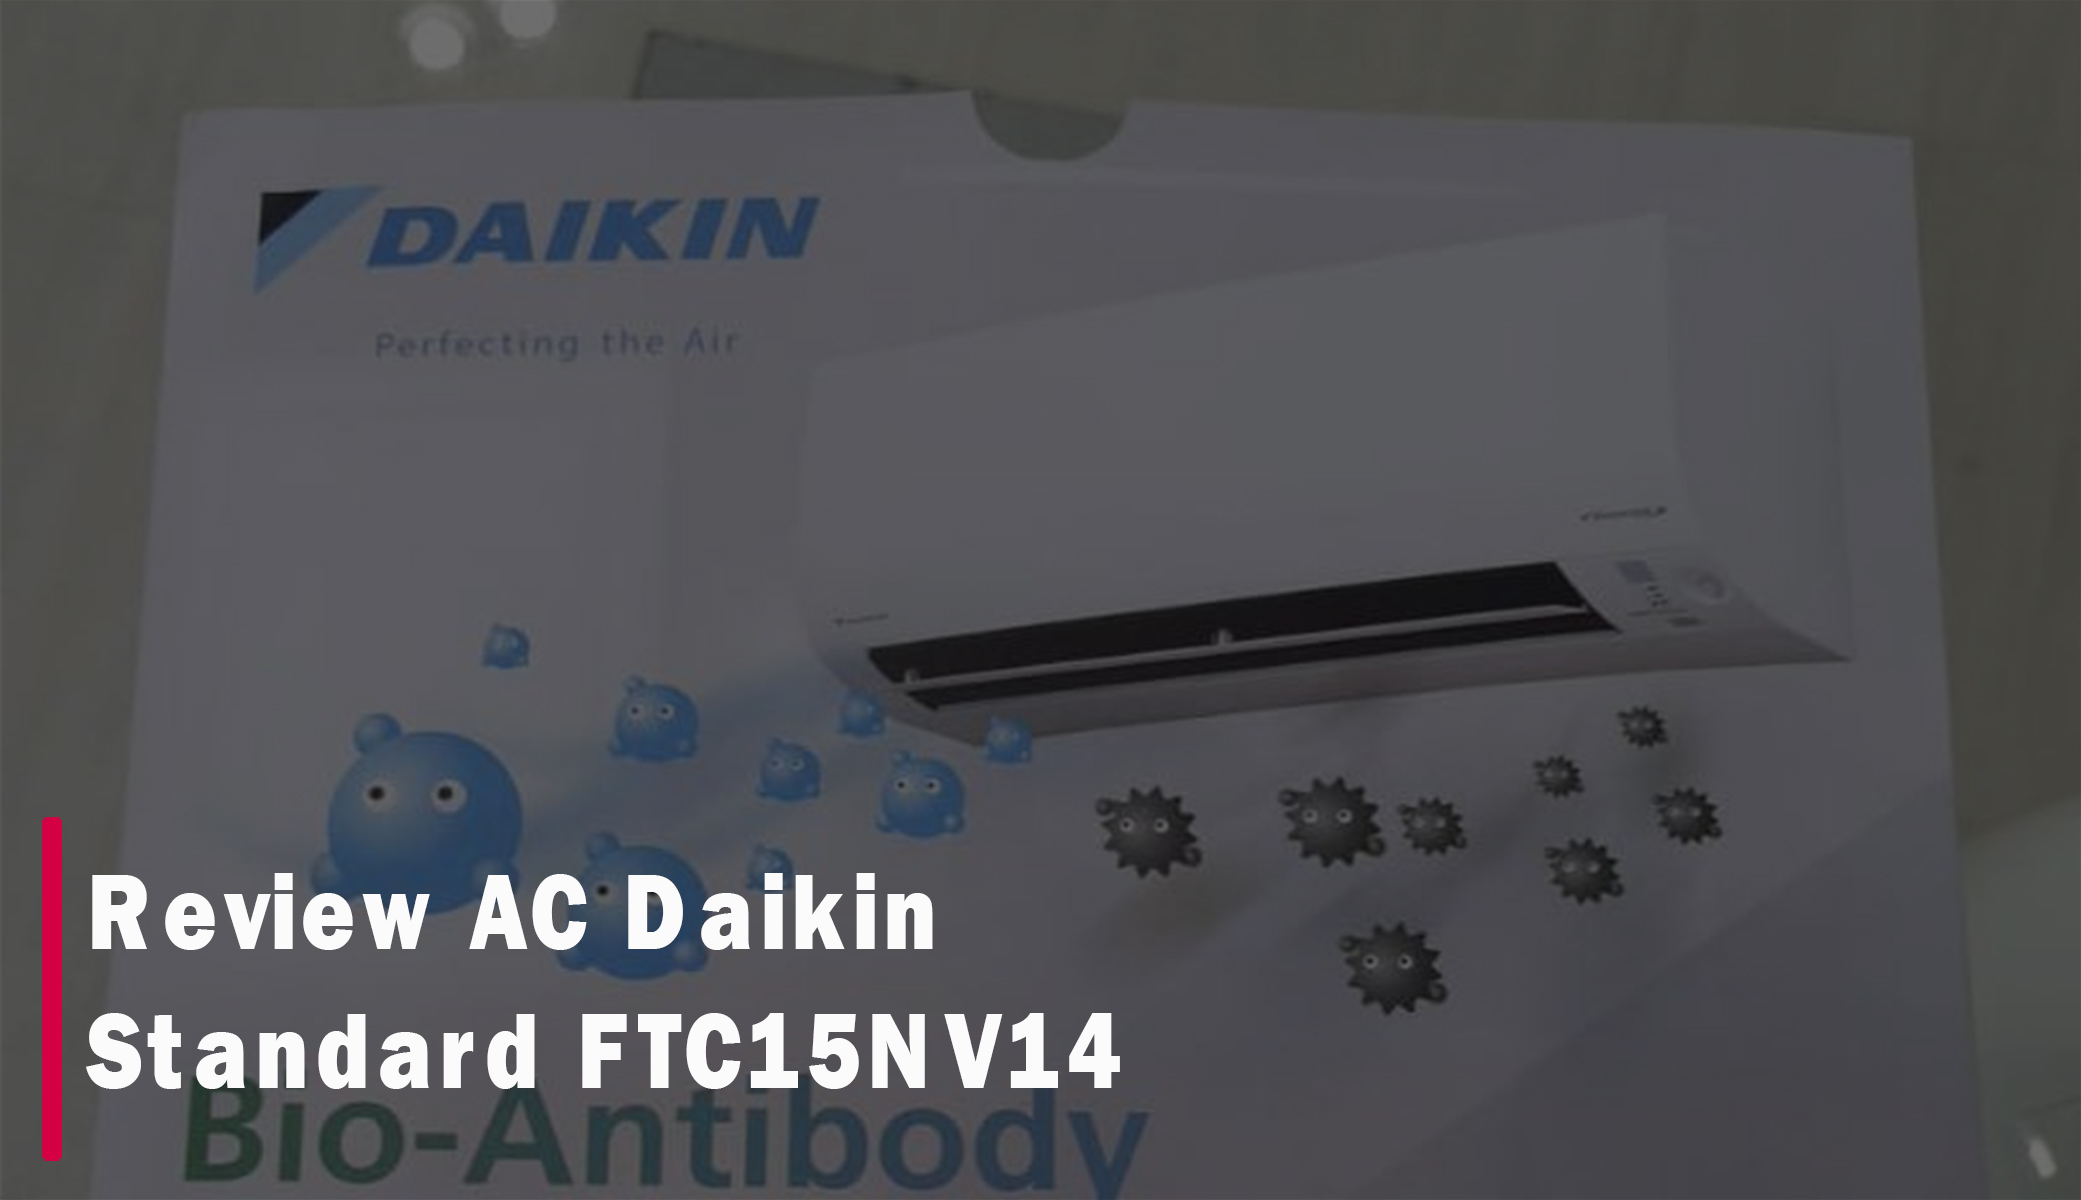 Review AC Daikin Standard FTC15NV14, Mampu Serap Bakteri dan Hilangkan Bau Tak Sedap